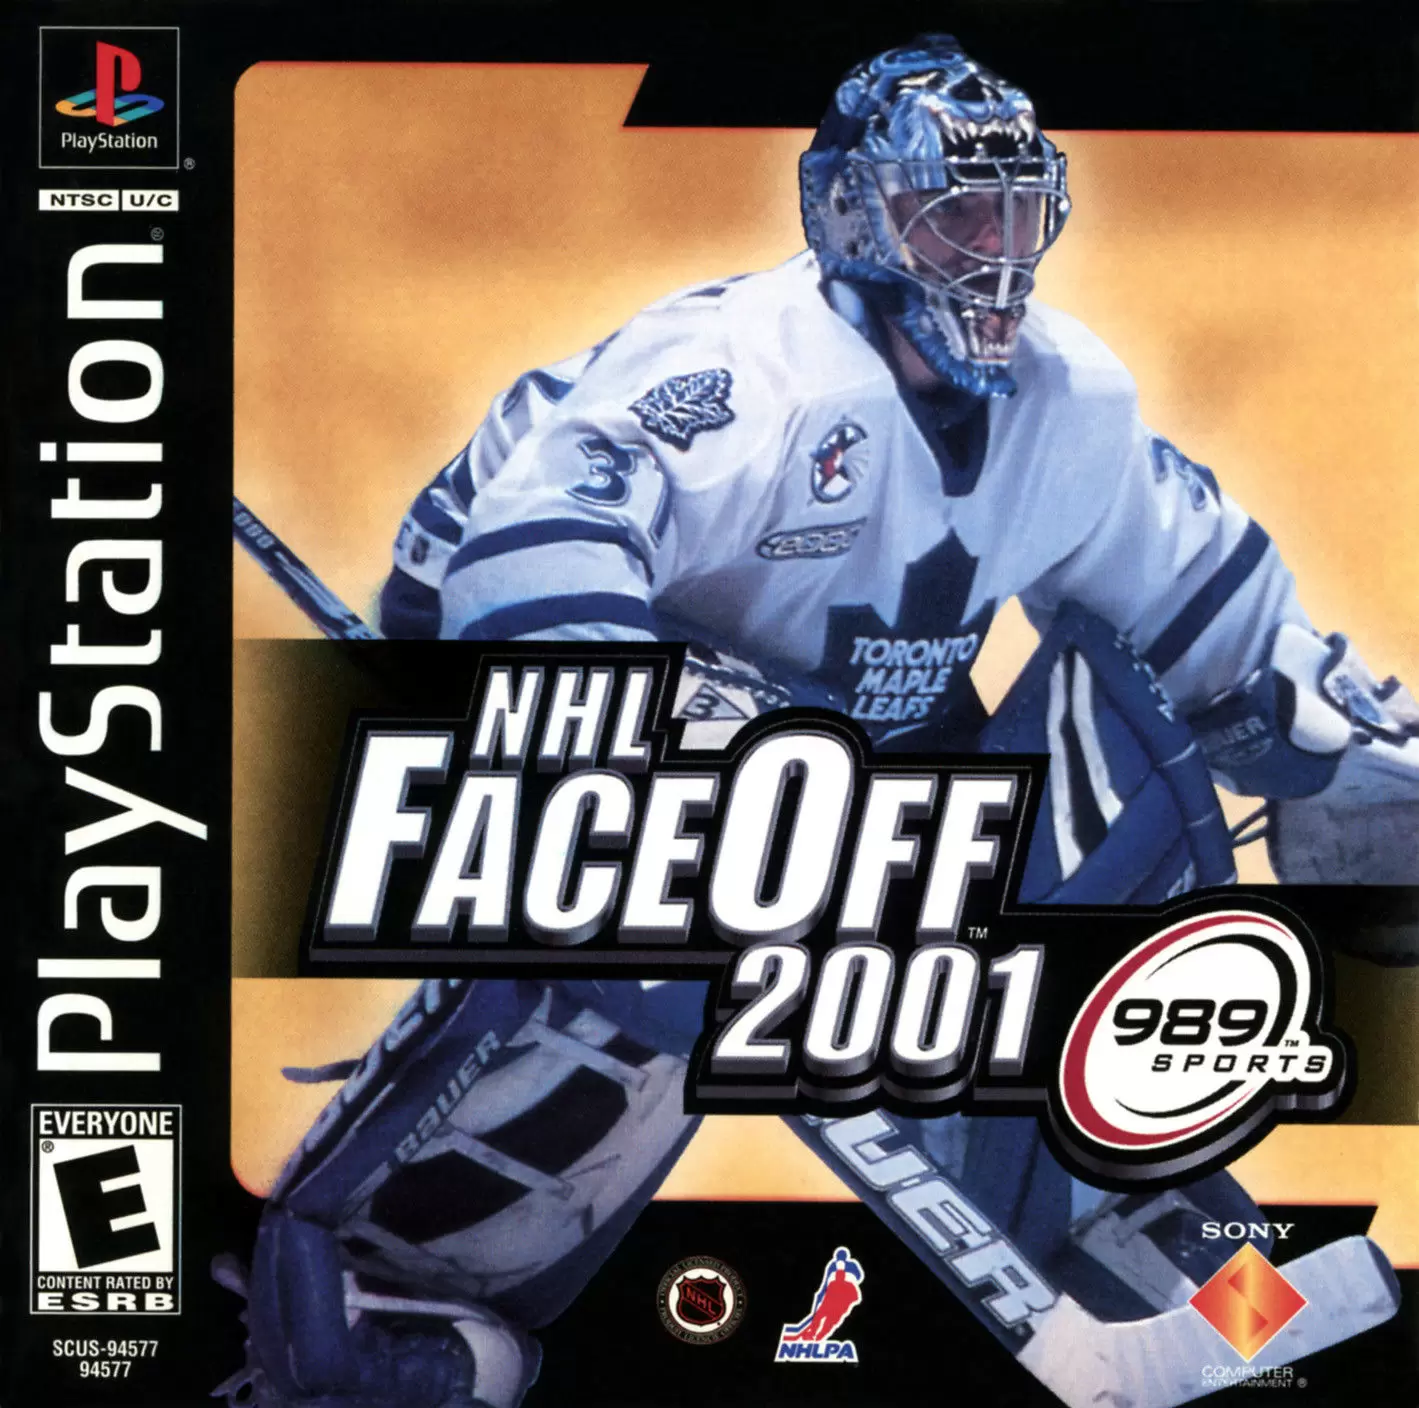 Playstation games - NHL FaceOff 2001